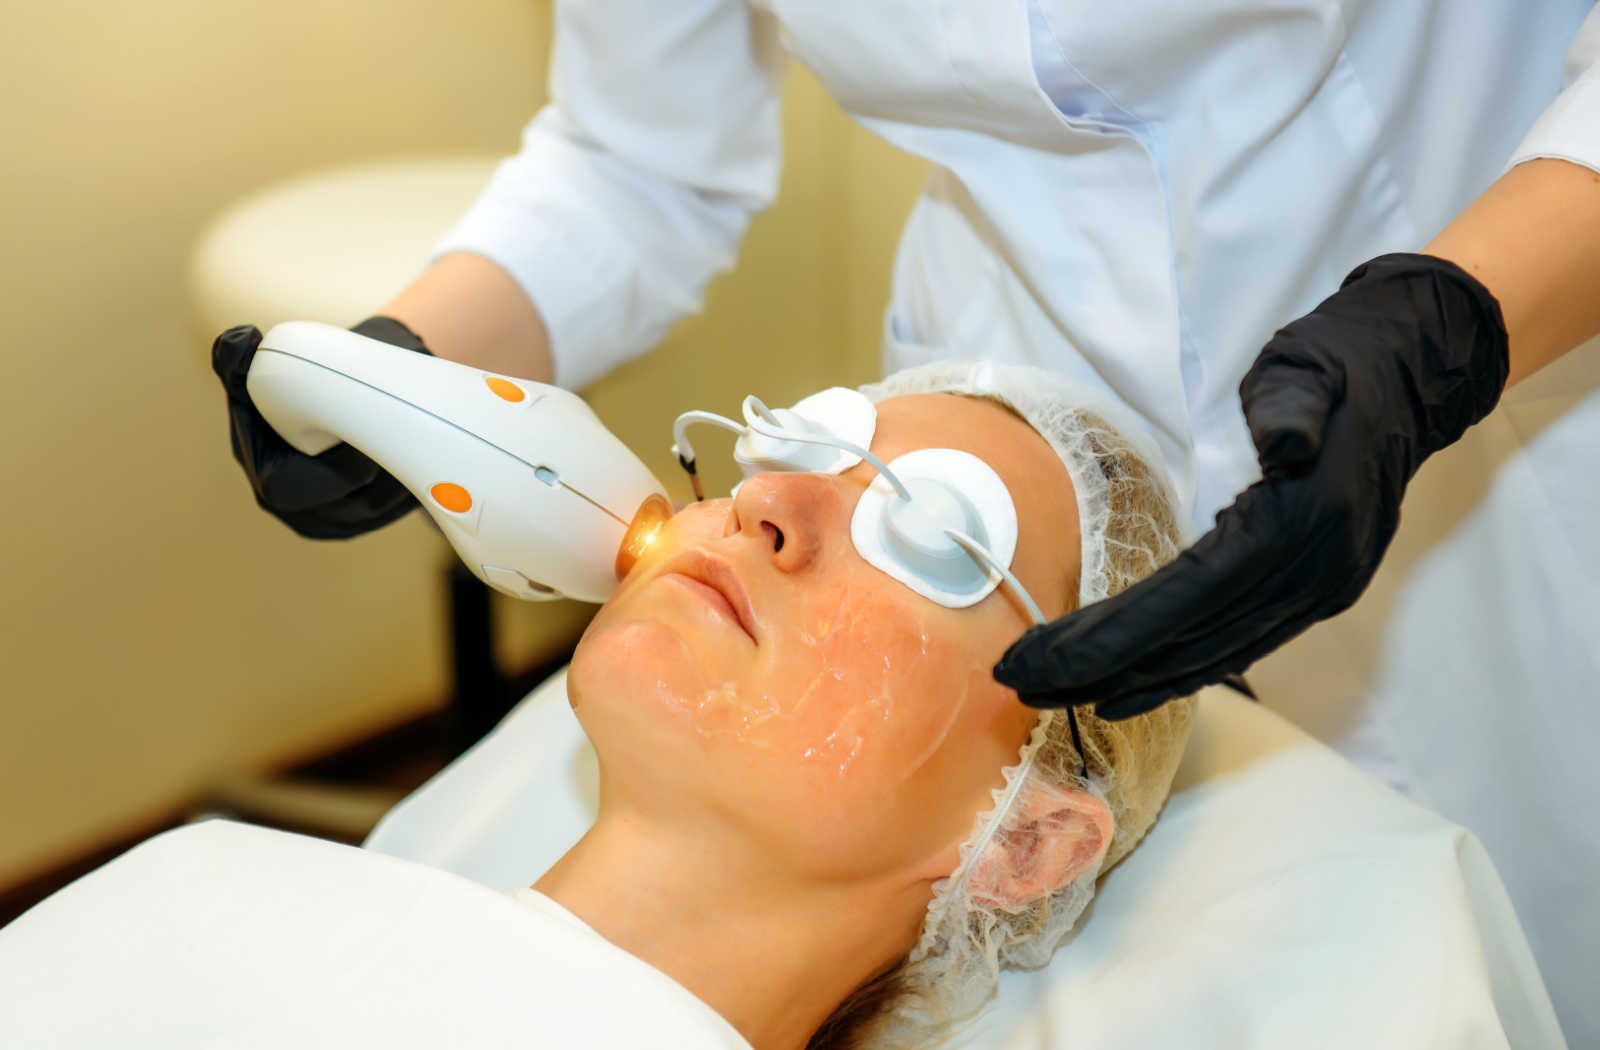 A woman receiving laser treatment for rosacea.